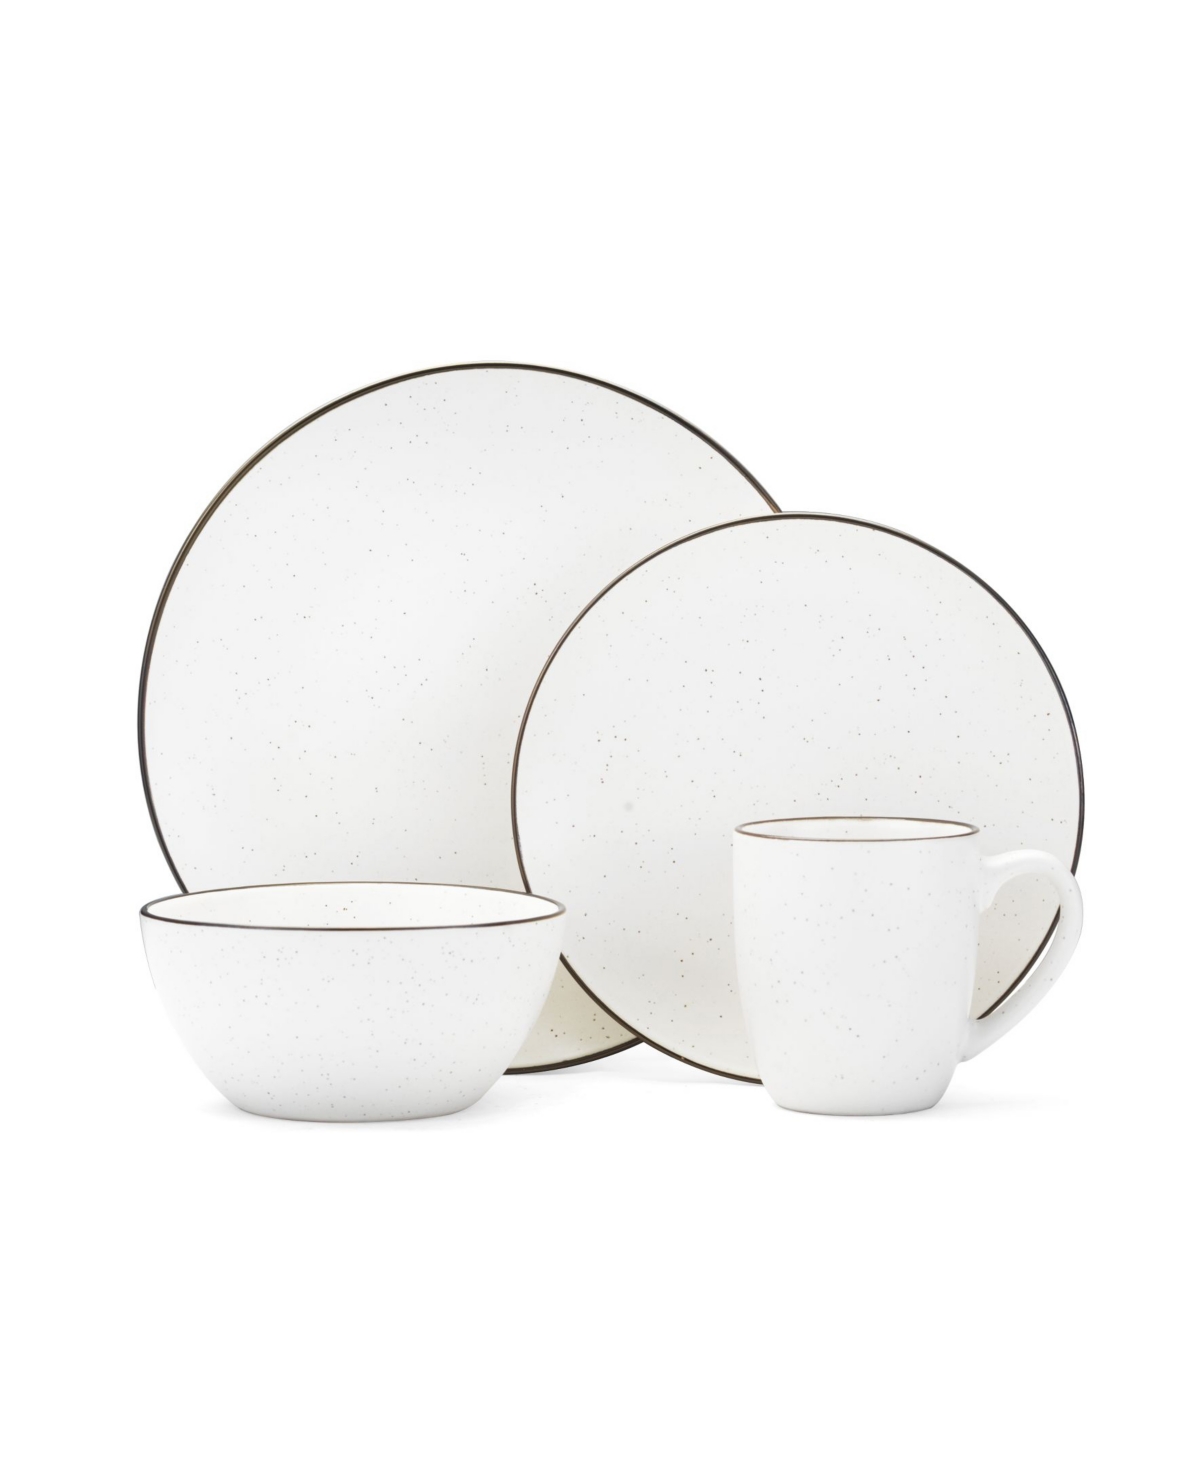 Gourmet Basics by Mikasa juliana cream 16 pc dinnerware set, service for 4 - Cream